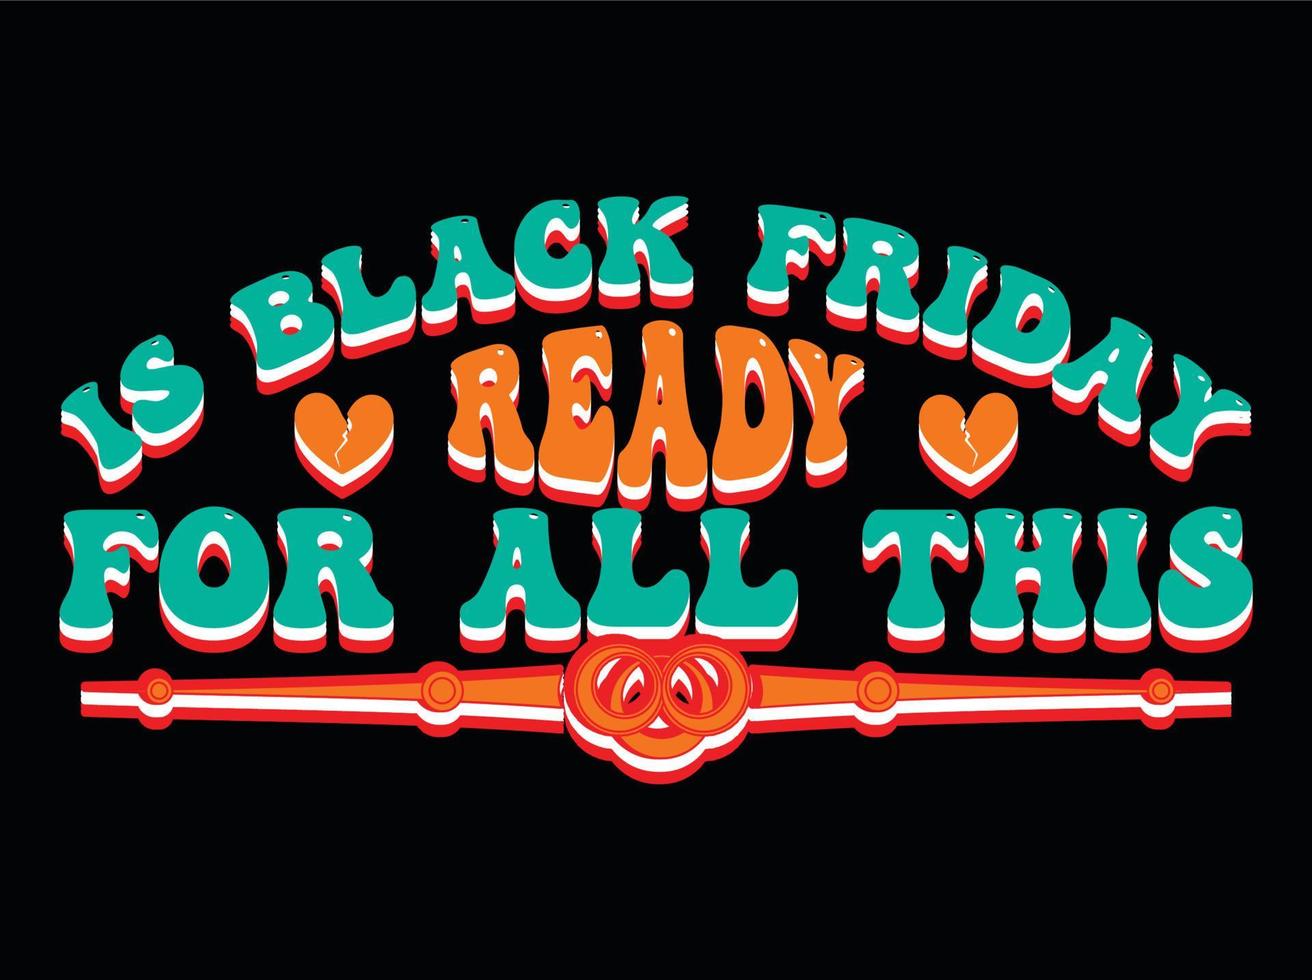 zwart vrijdag SVG ontwerp, retro t-shirt ontwerp, zwart vrijdag t-shirt ontwerp, zwart vrijdag ambacht, zwart vrijdag tekst ontwerp vector